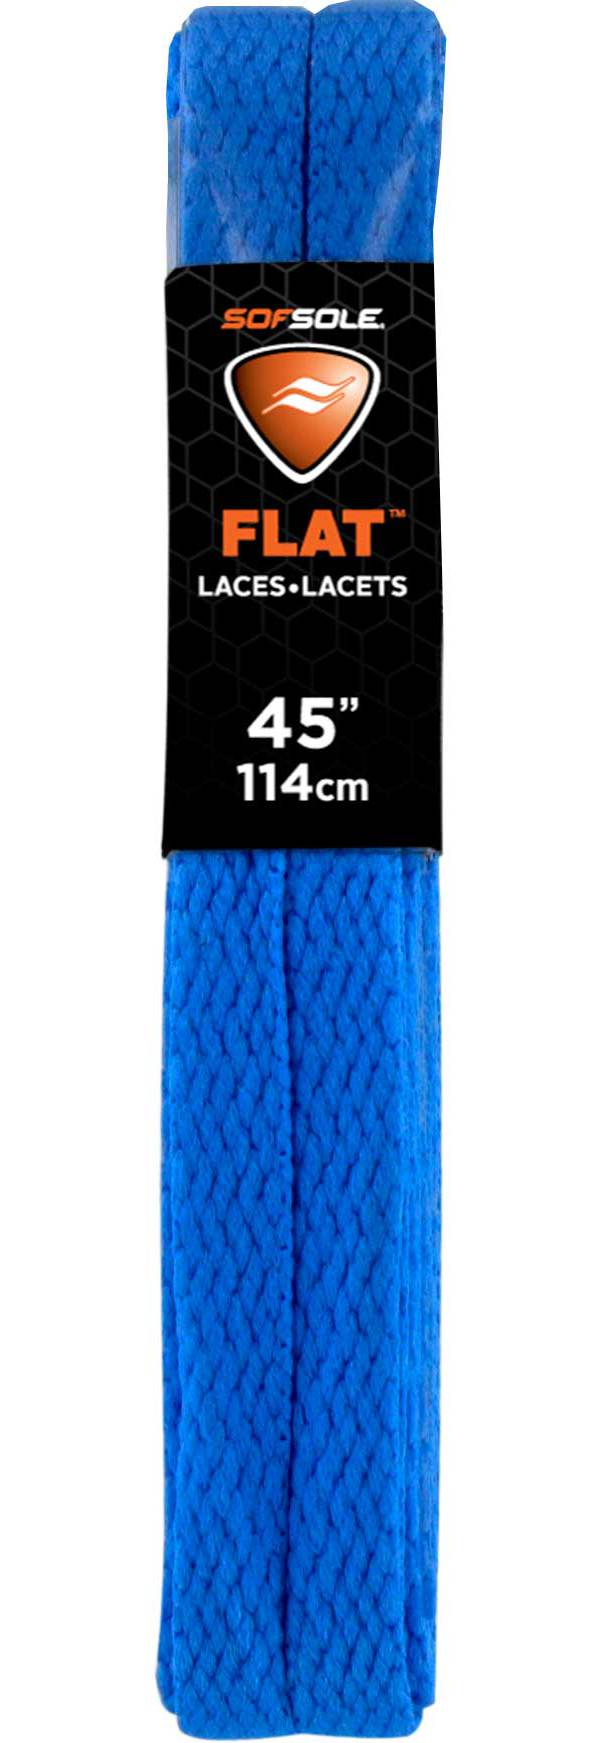 AQUA GLITTER SPARKLE SHOE STRINGS 45" inch Flat Athletic Sneaker LACES 6-7 eye